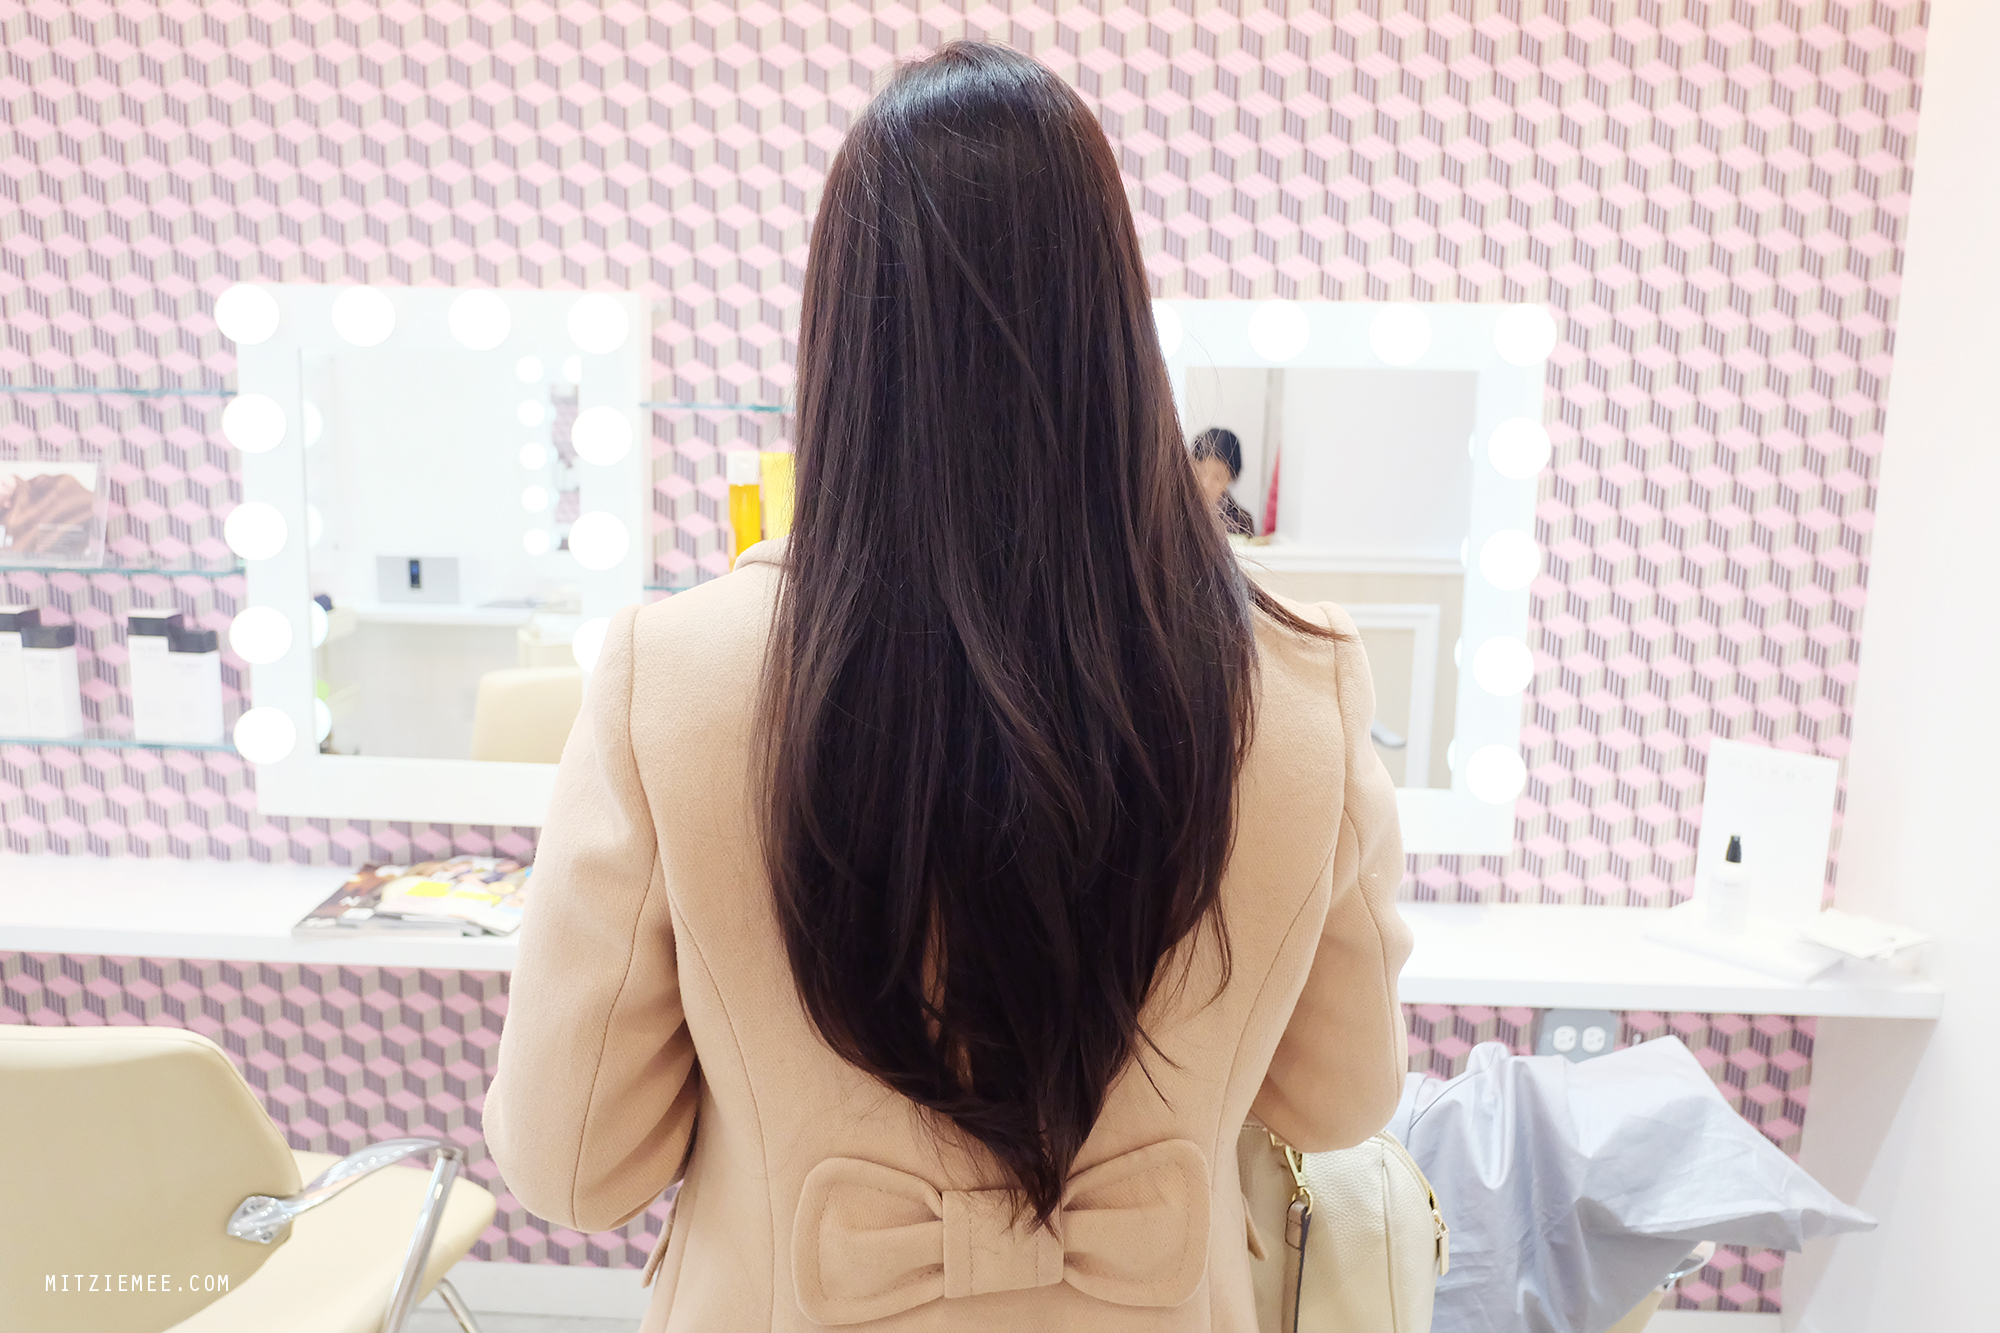 Brave - En japansk frisørsalon i New York Blog - Mitzie Mee